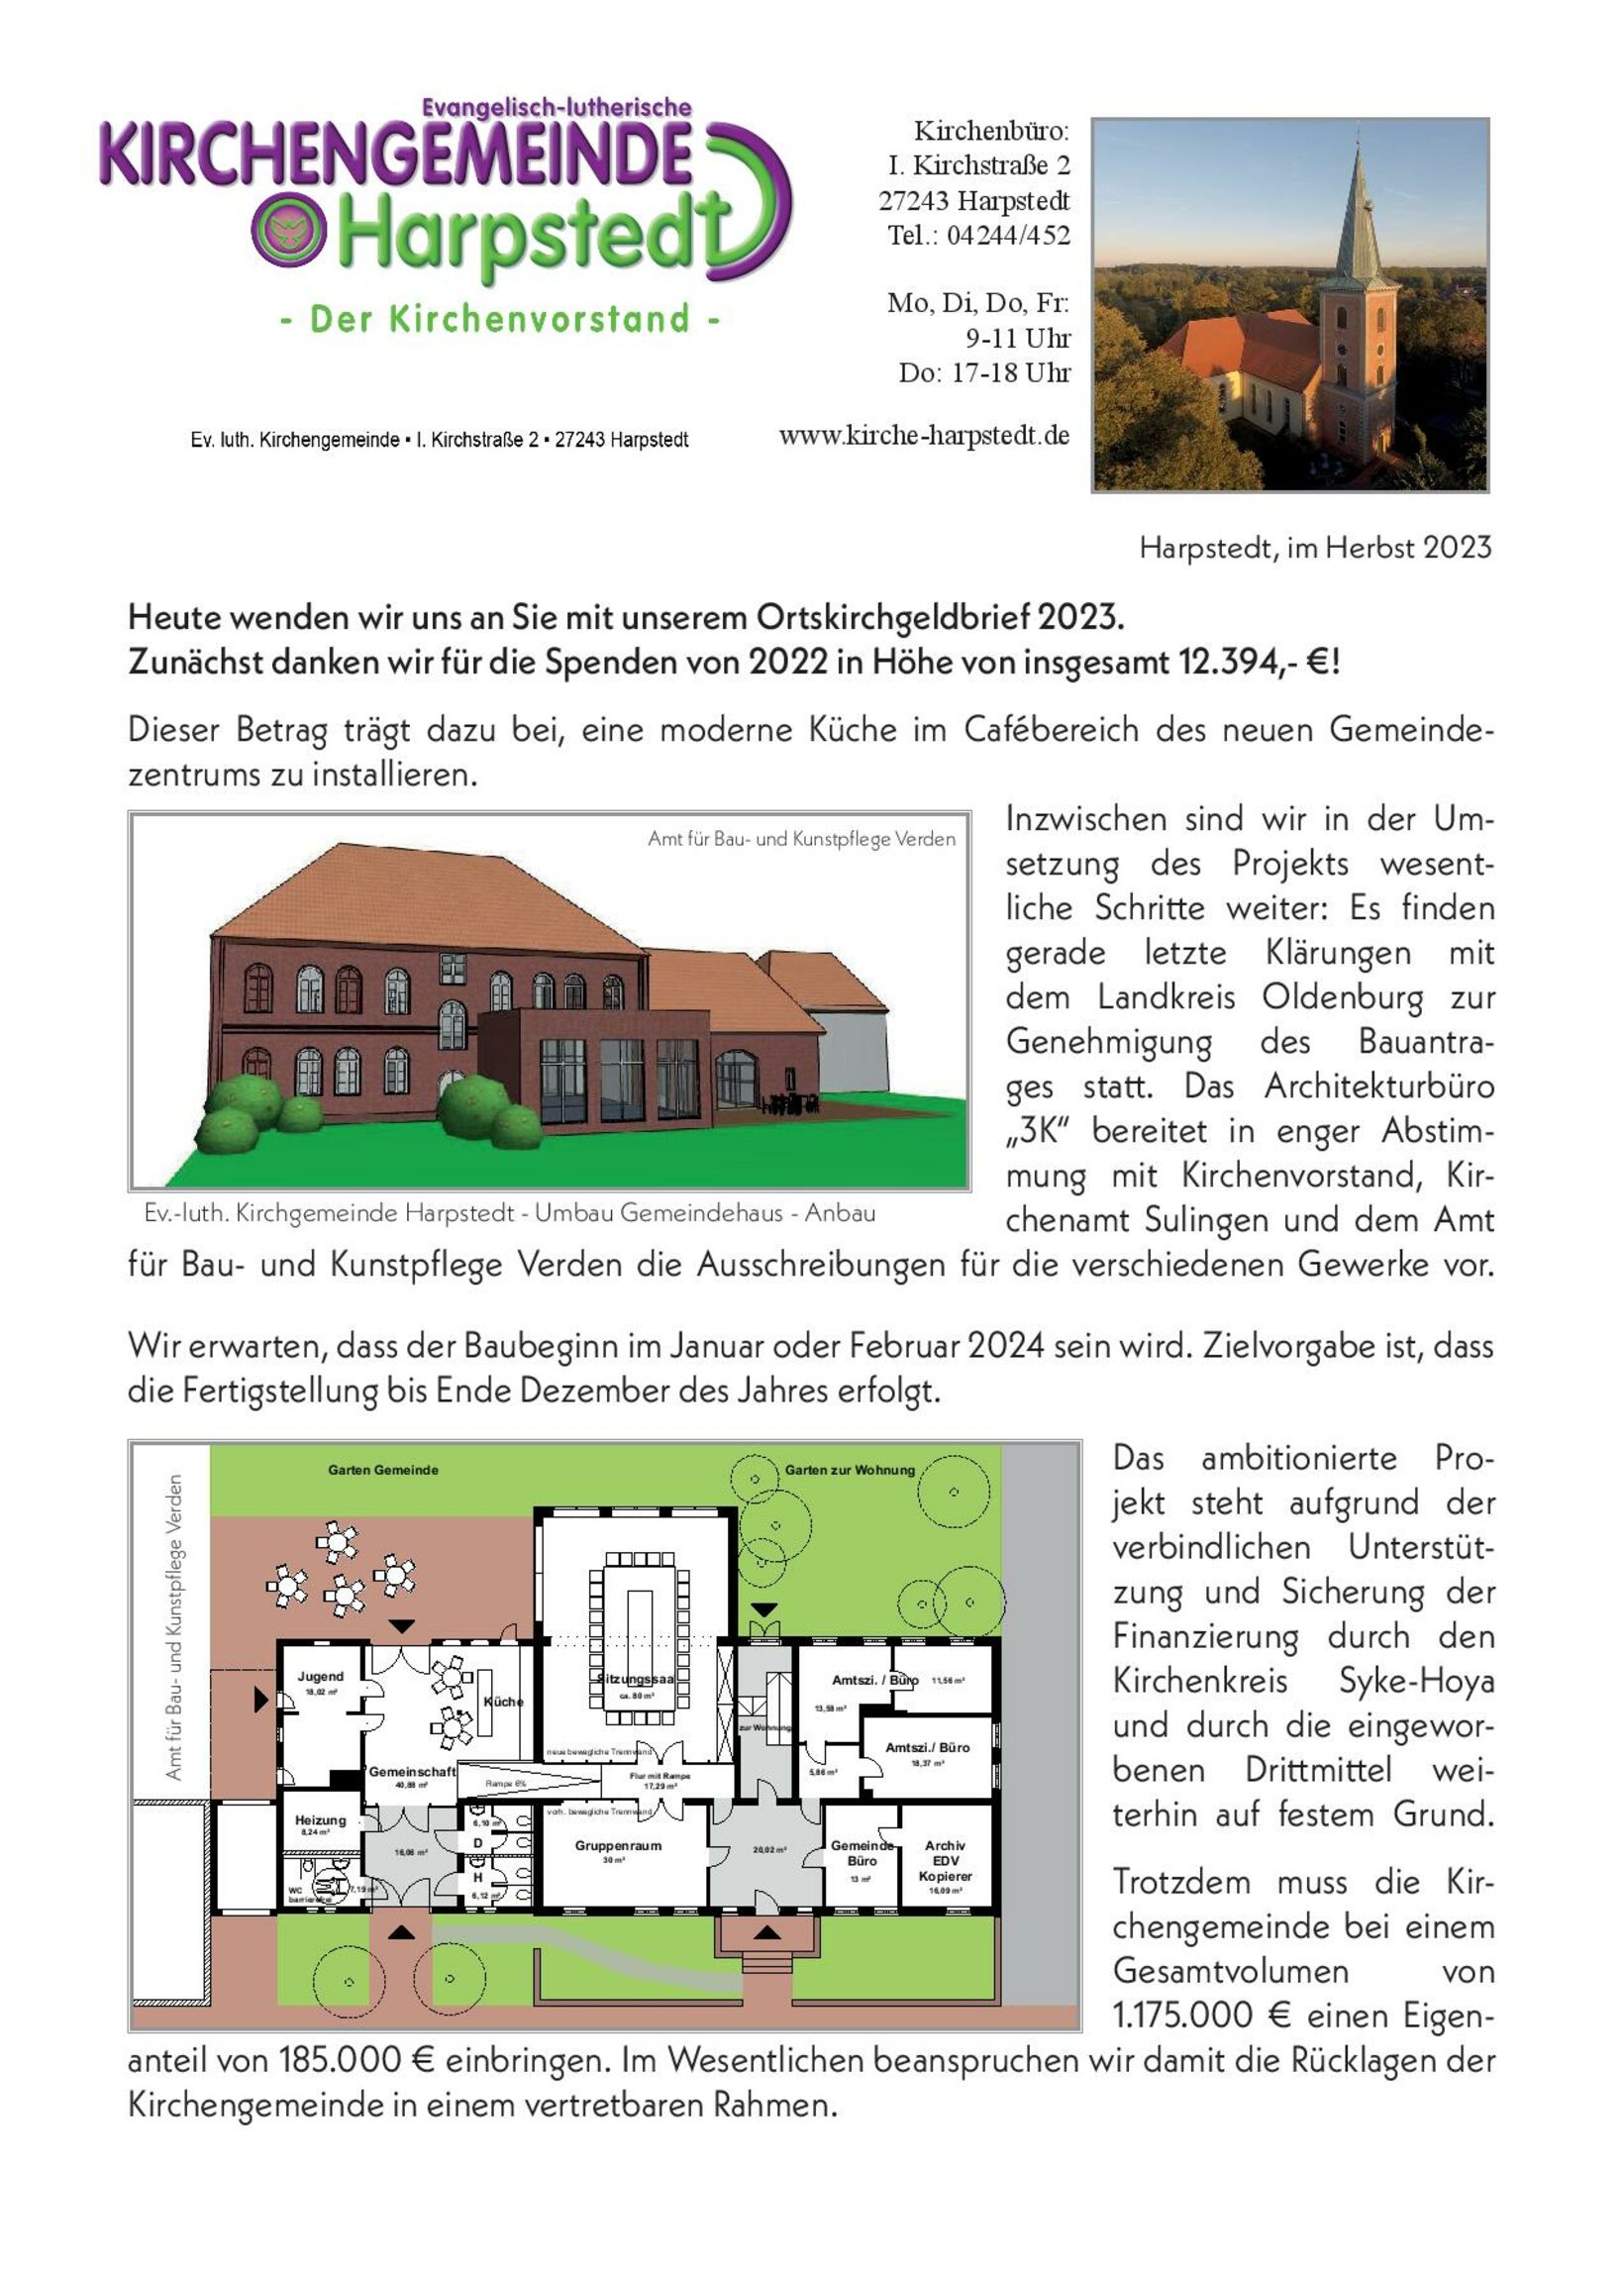 Ortskirchgeldbrief 2023 A4-page-001